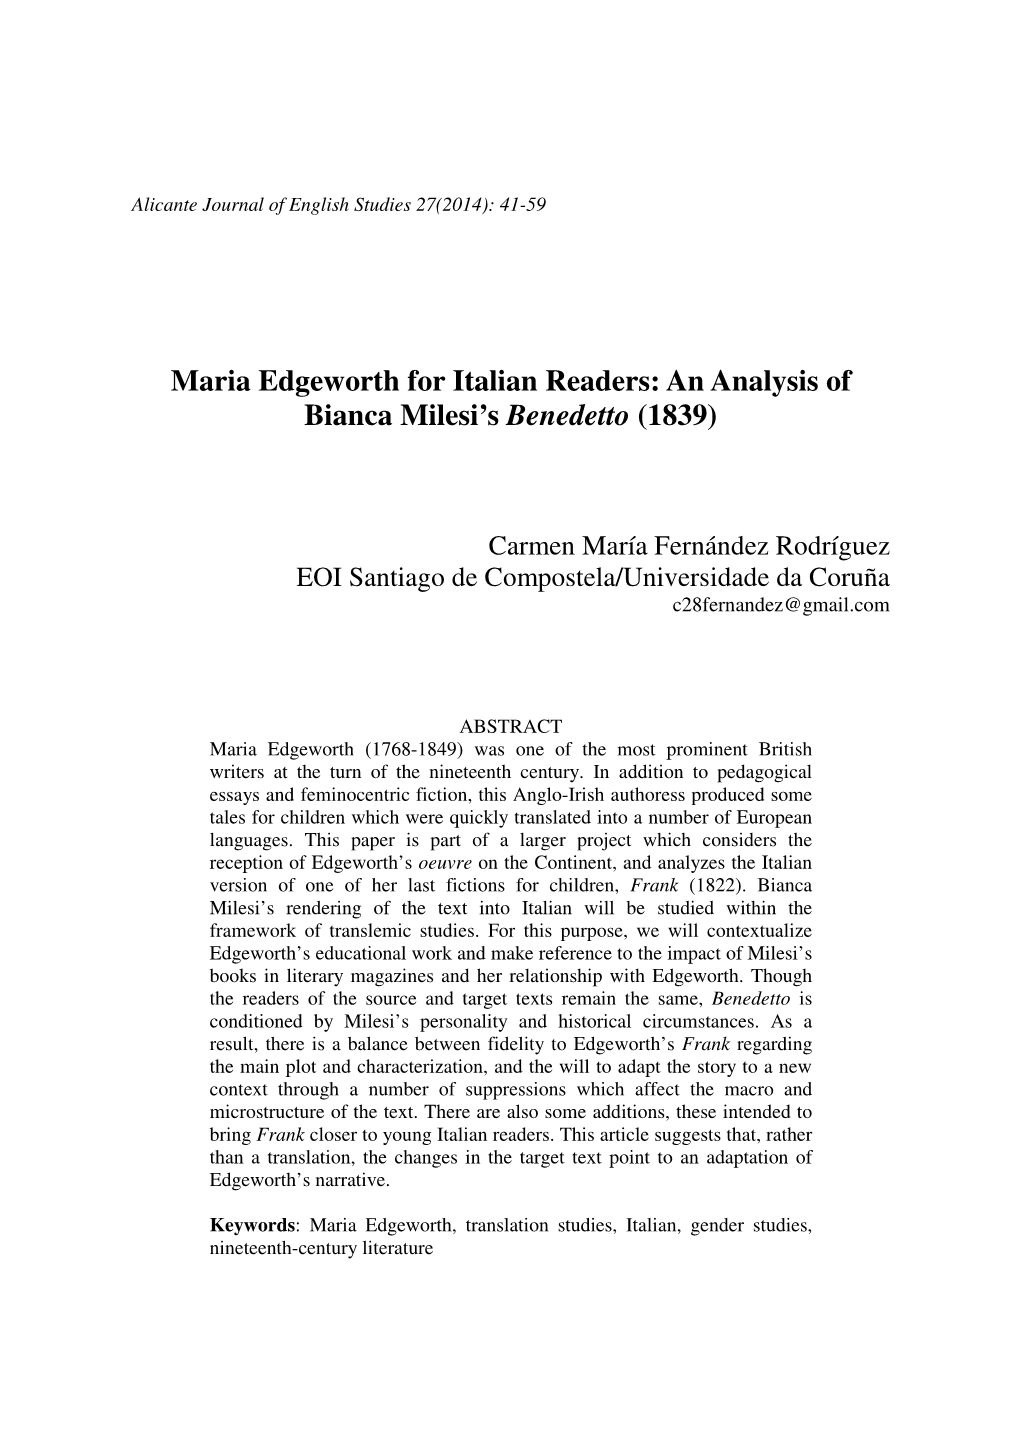 Maria Edgeworth for Italian Readers: an Analysis of Bianca Milesi's